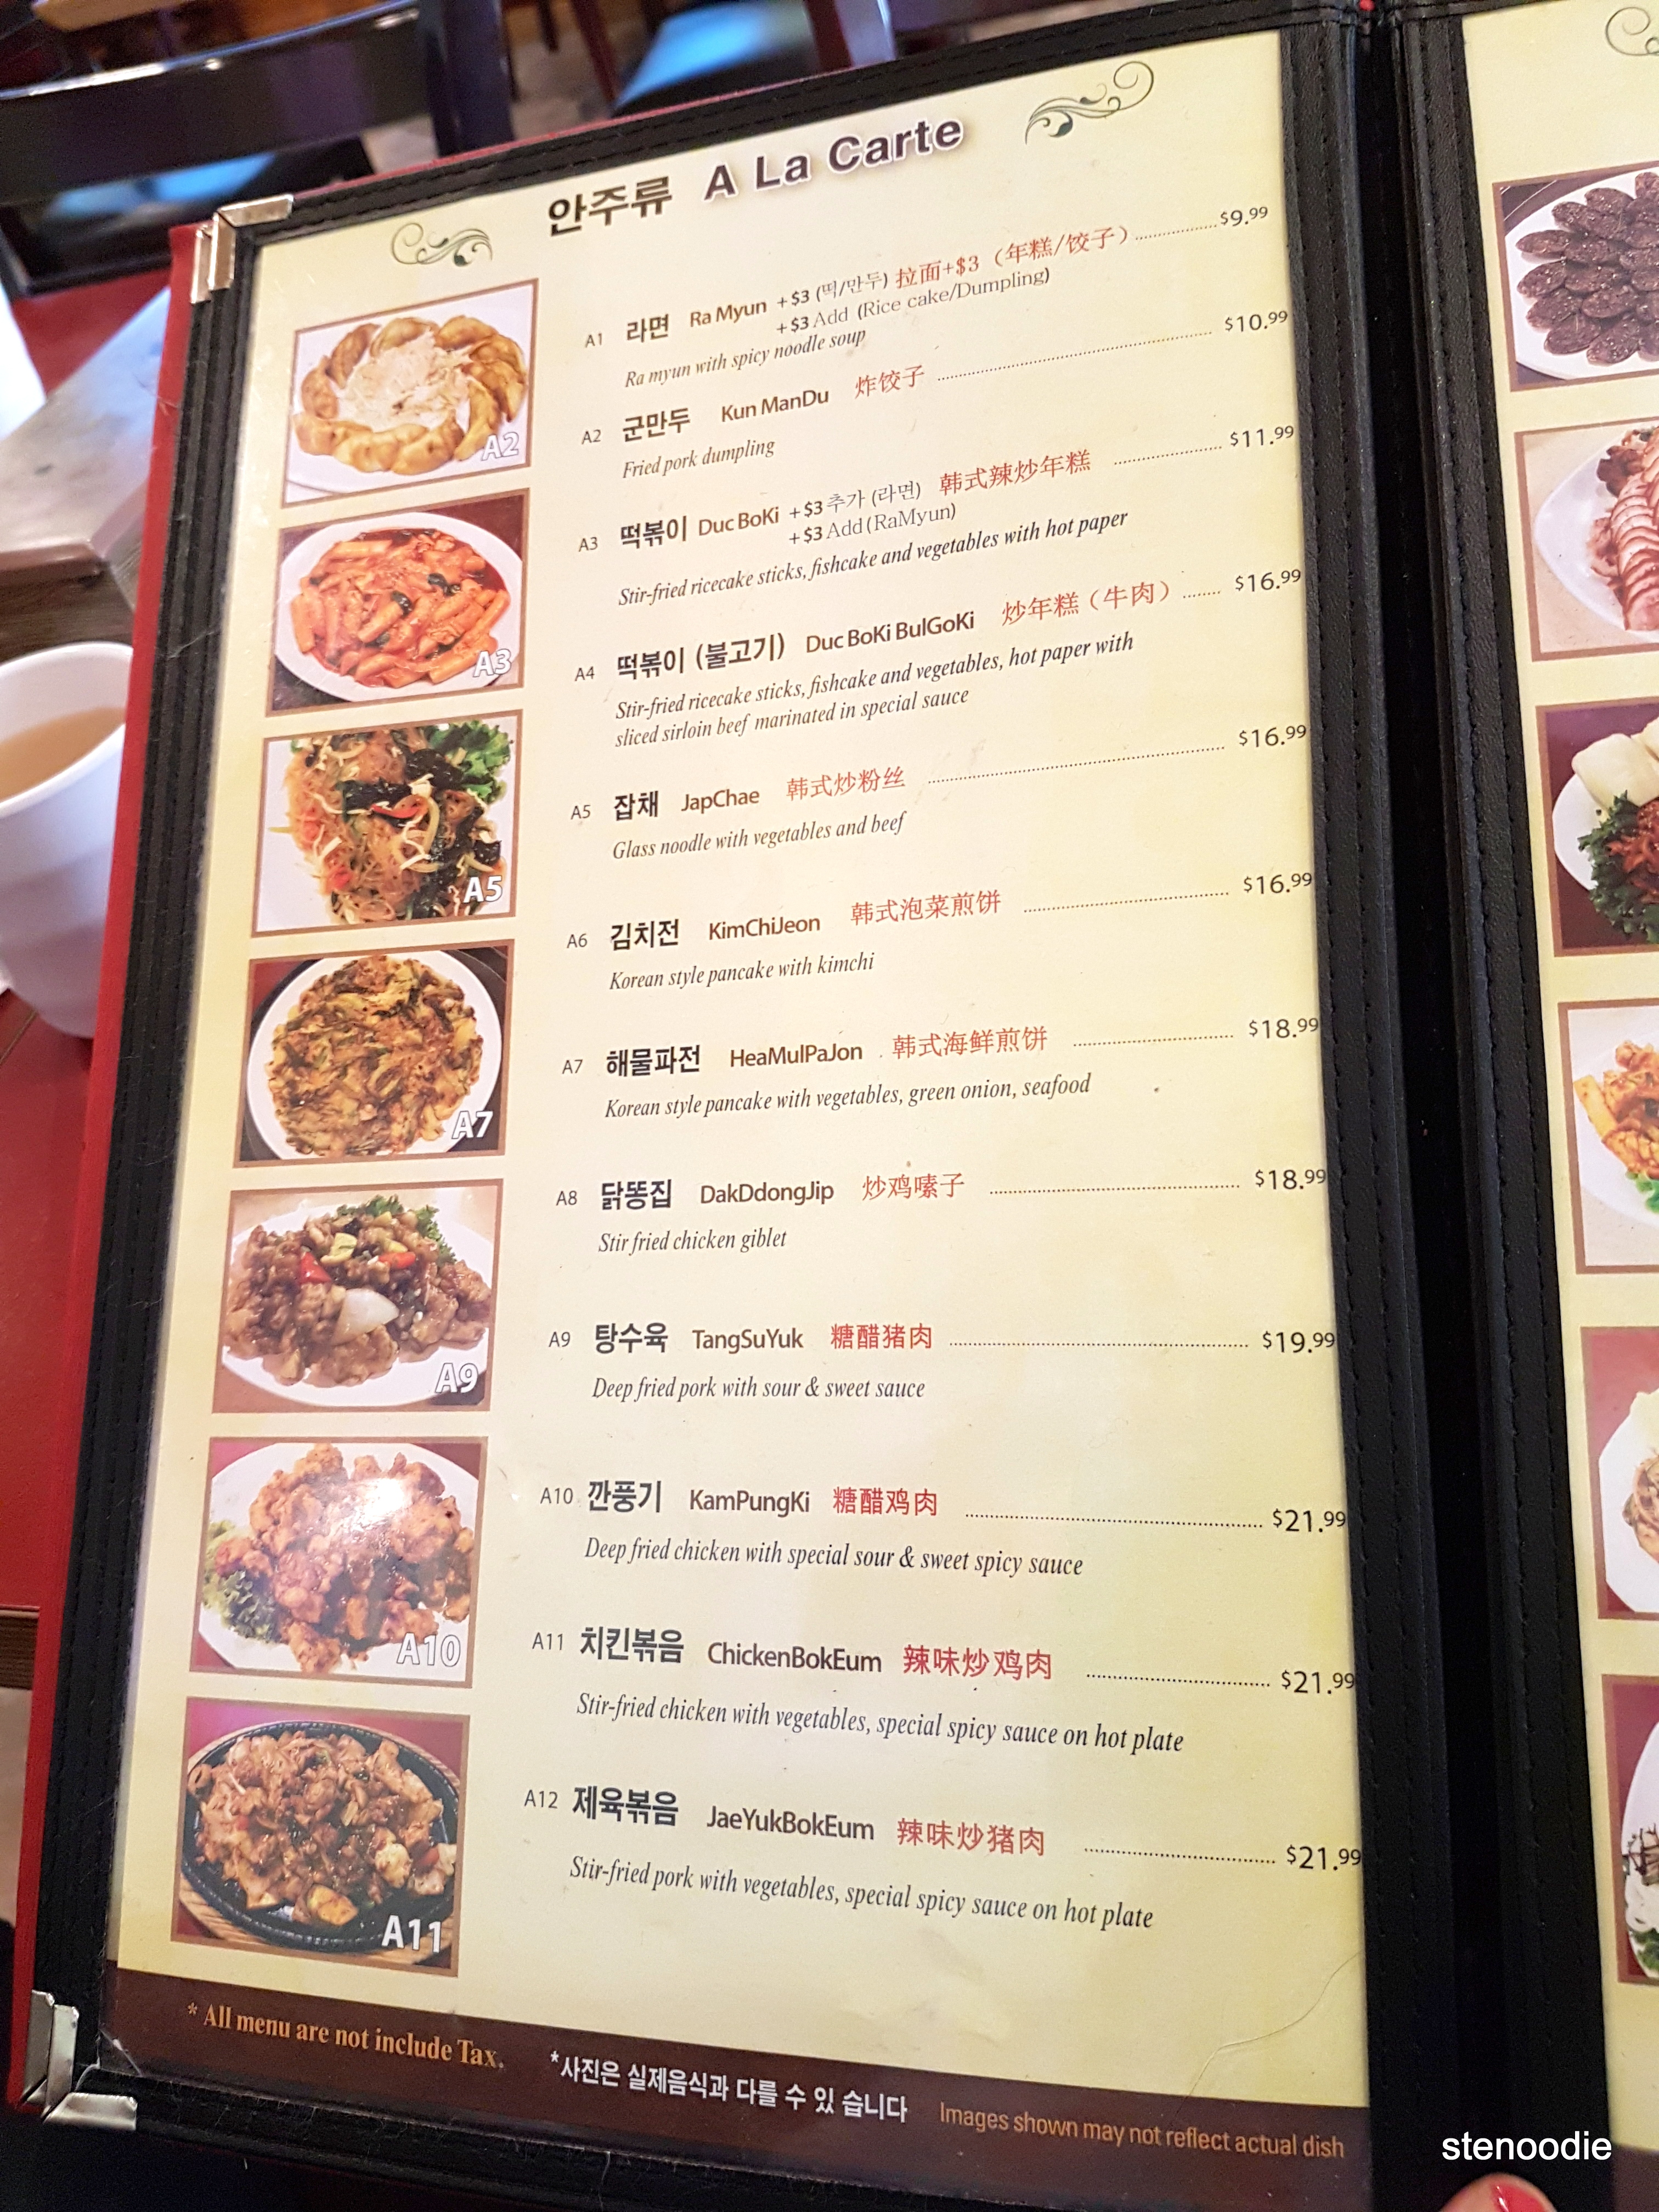  Lim Ga Ne Yonge and Finch menu and prices